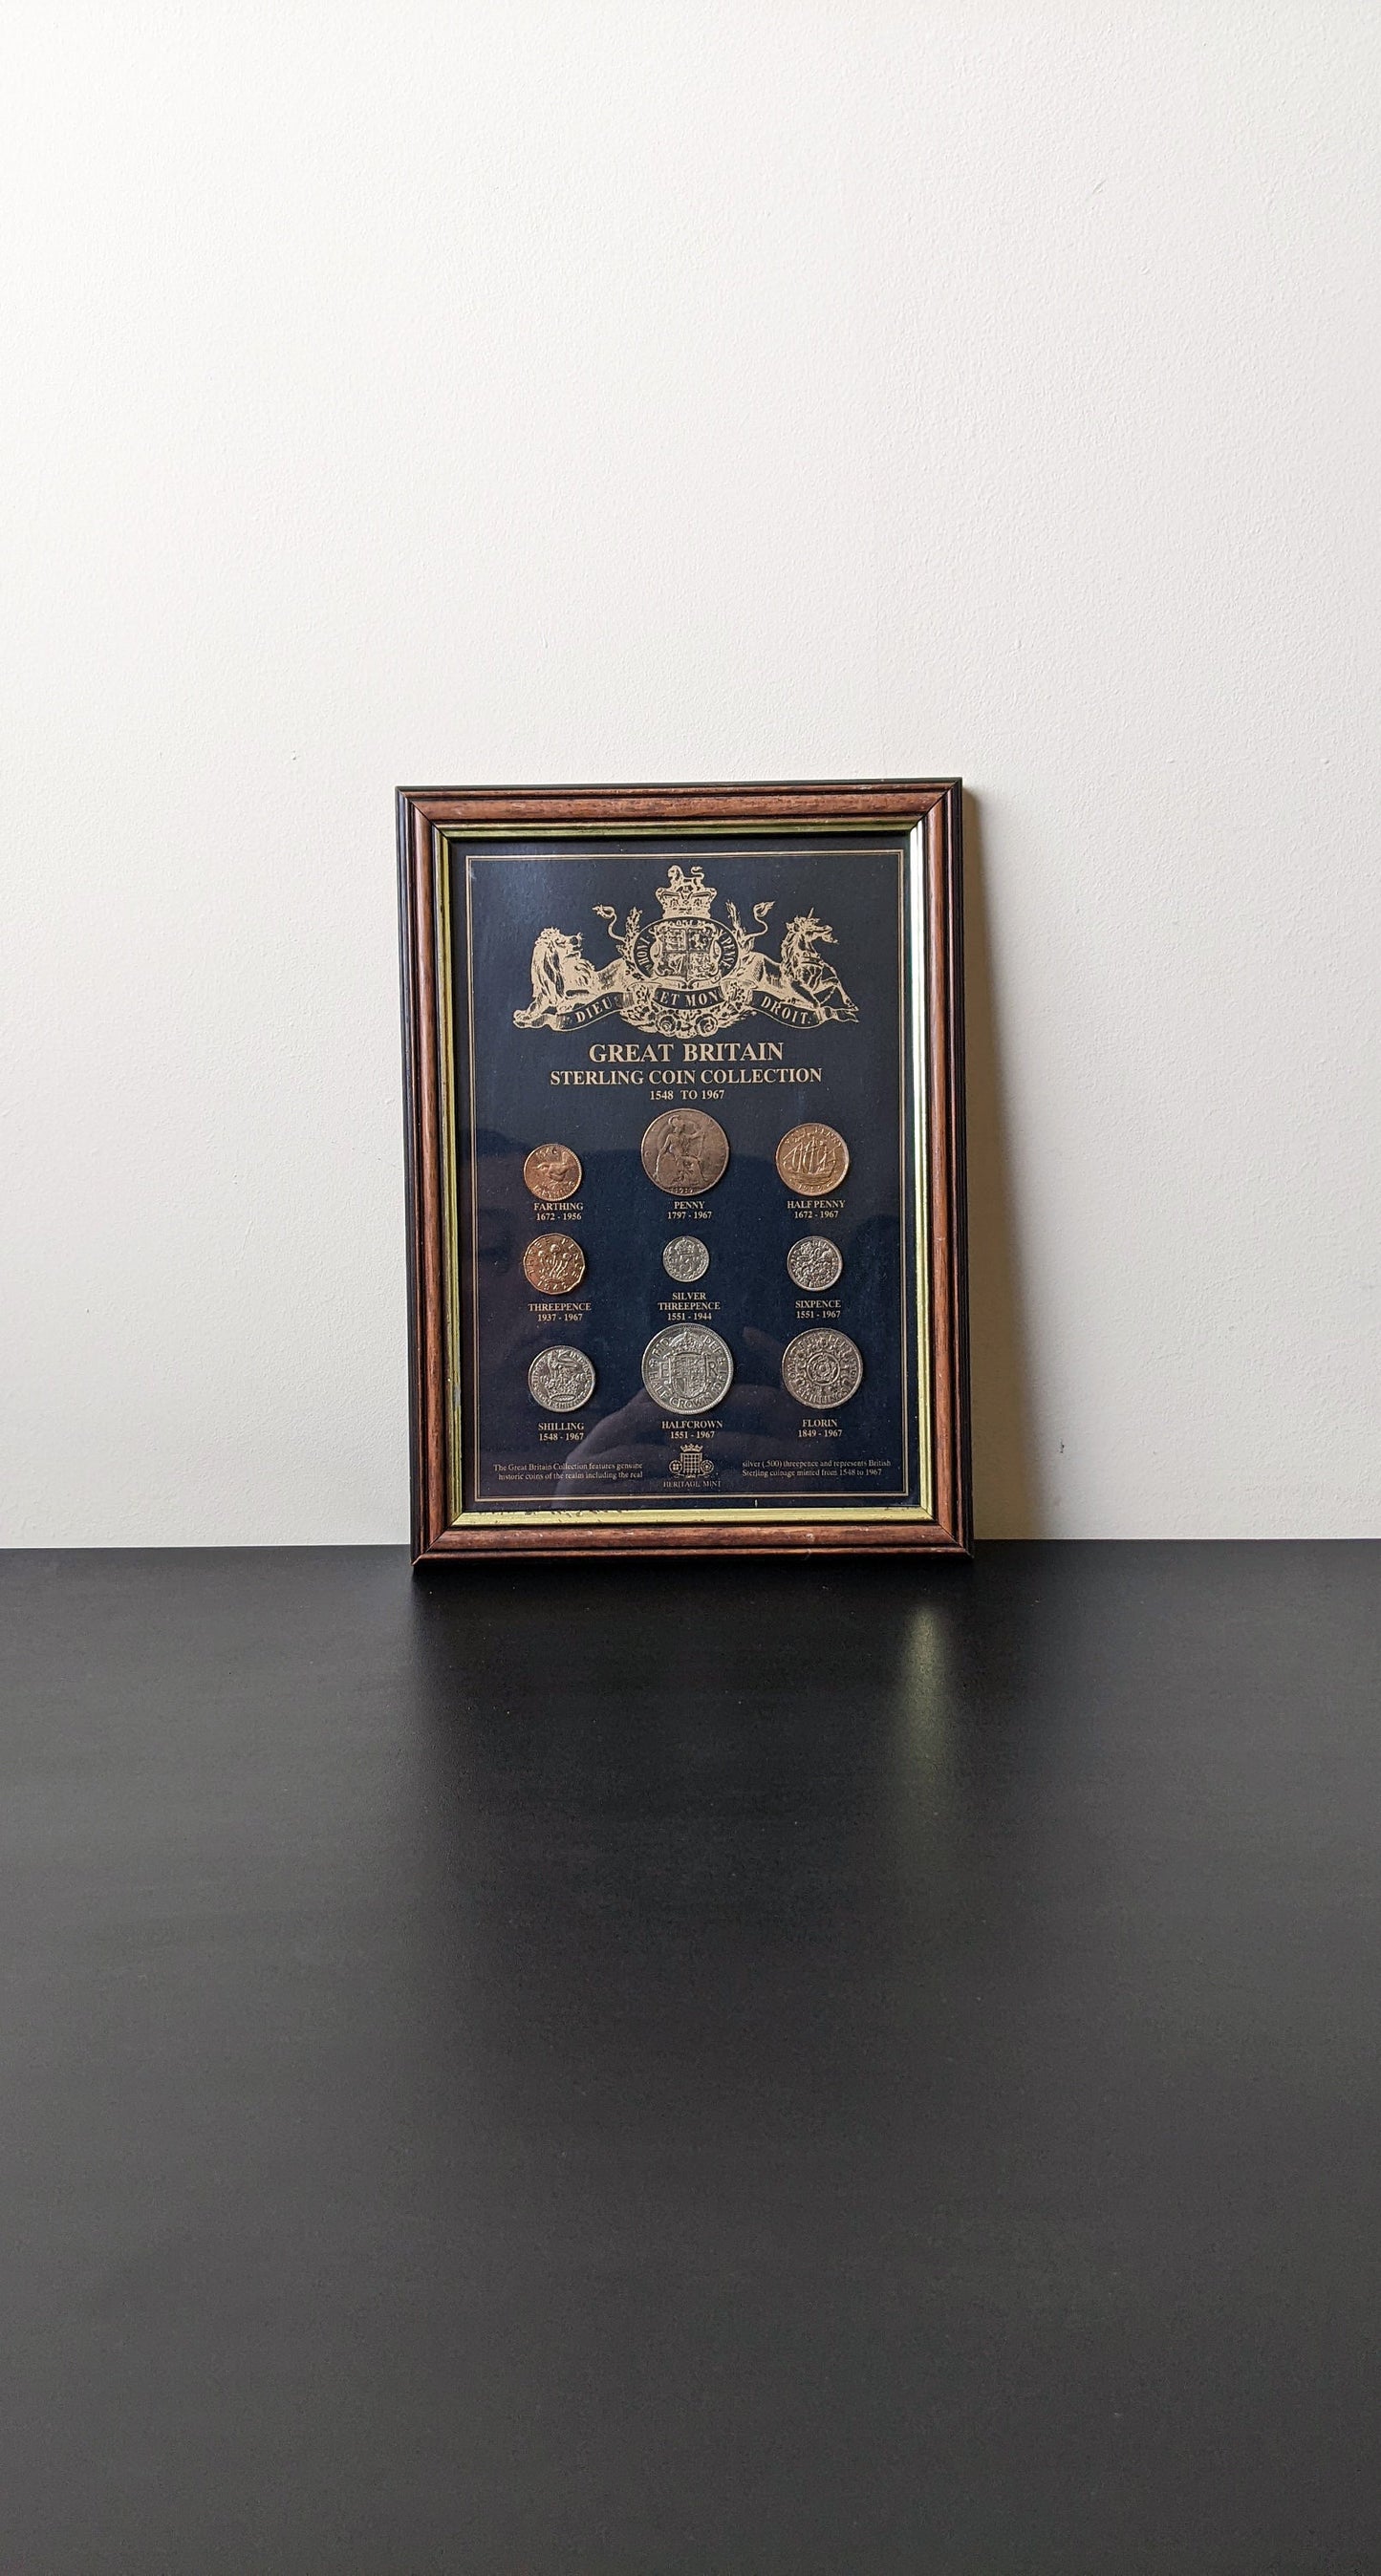 Vintage Framed Coin Collection by Heritage Mint, Pre Decimal British Currency Florin Halfcrown